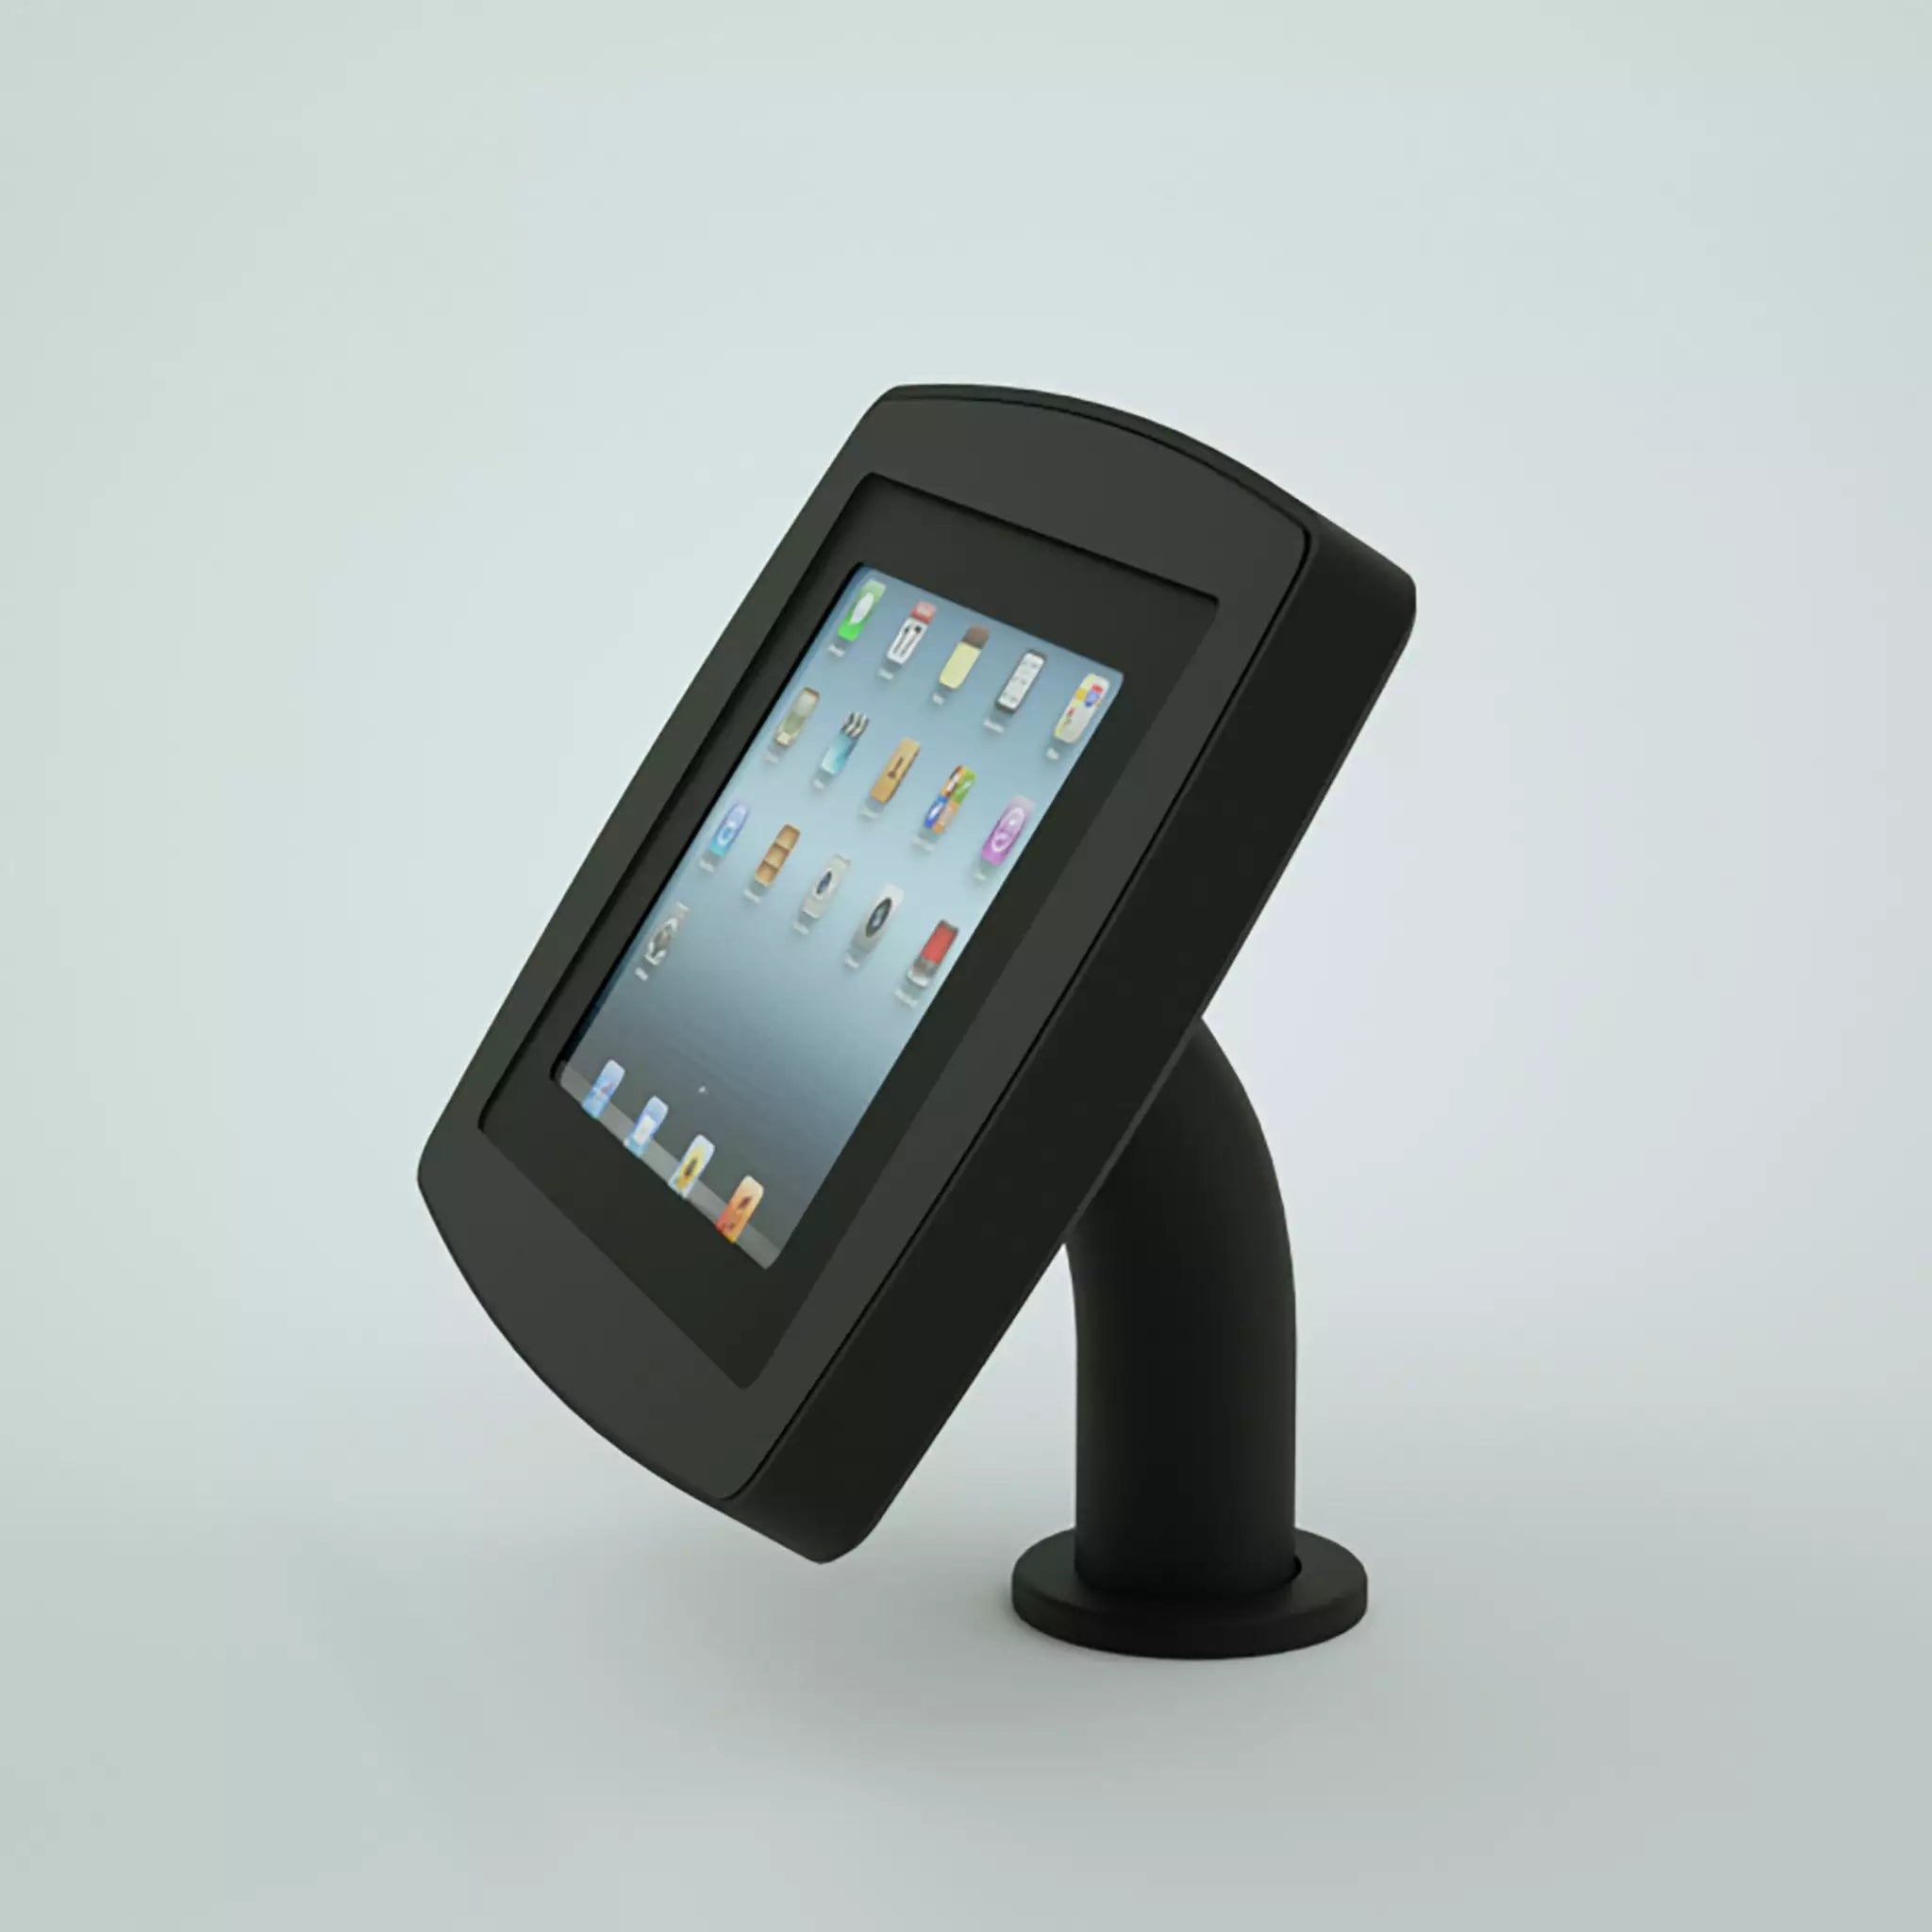 Tablet Kiosk Stand for iPad in Landscape or Portrait